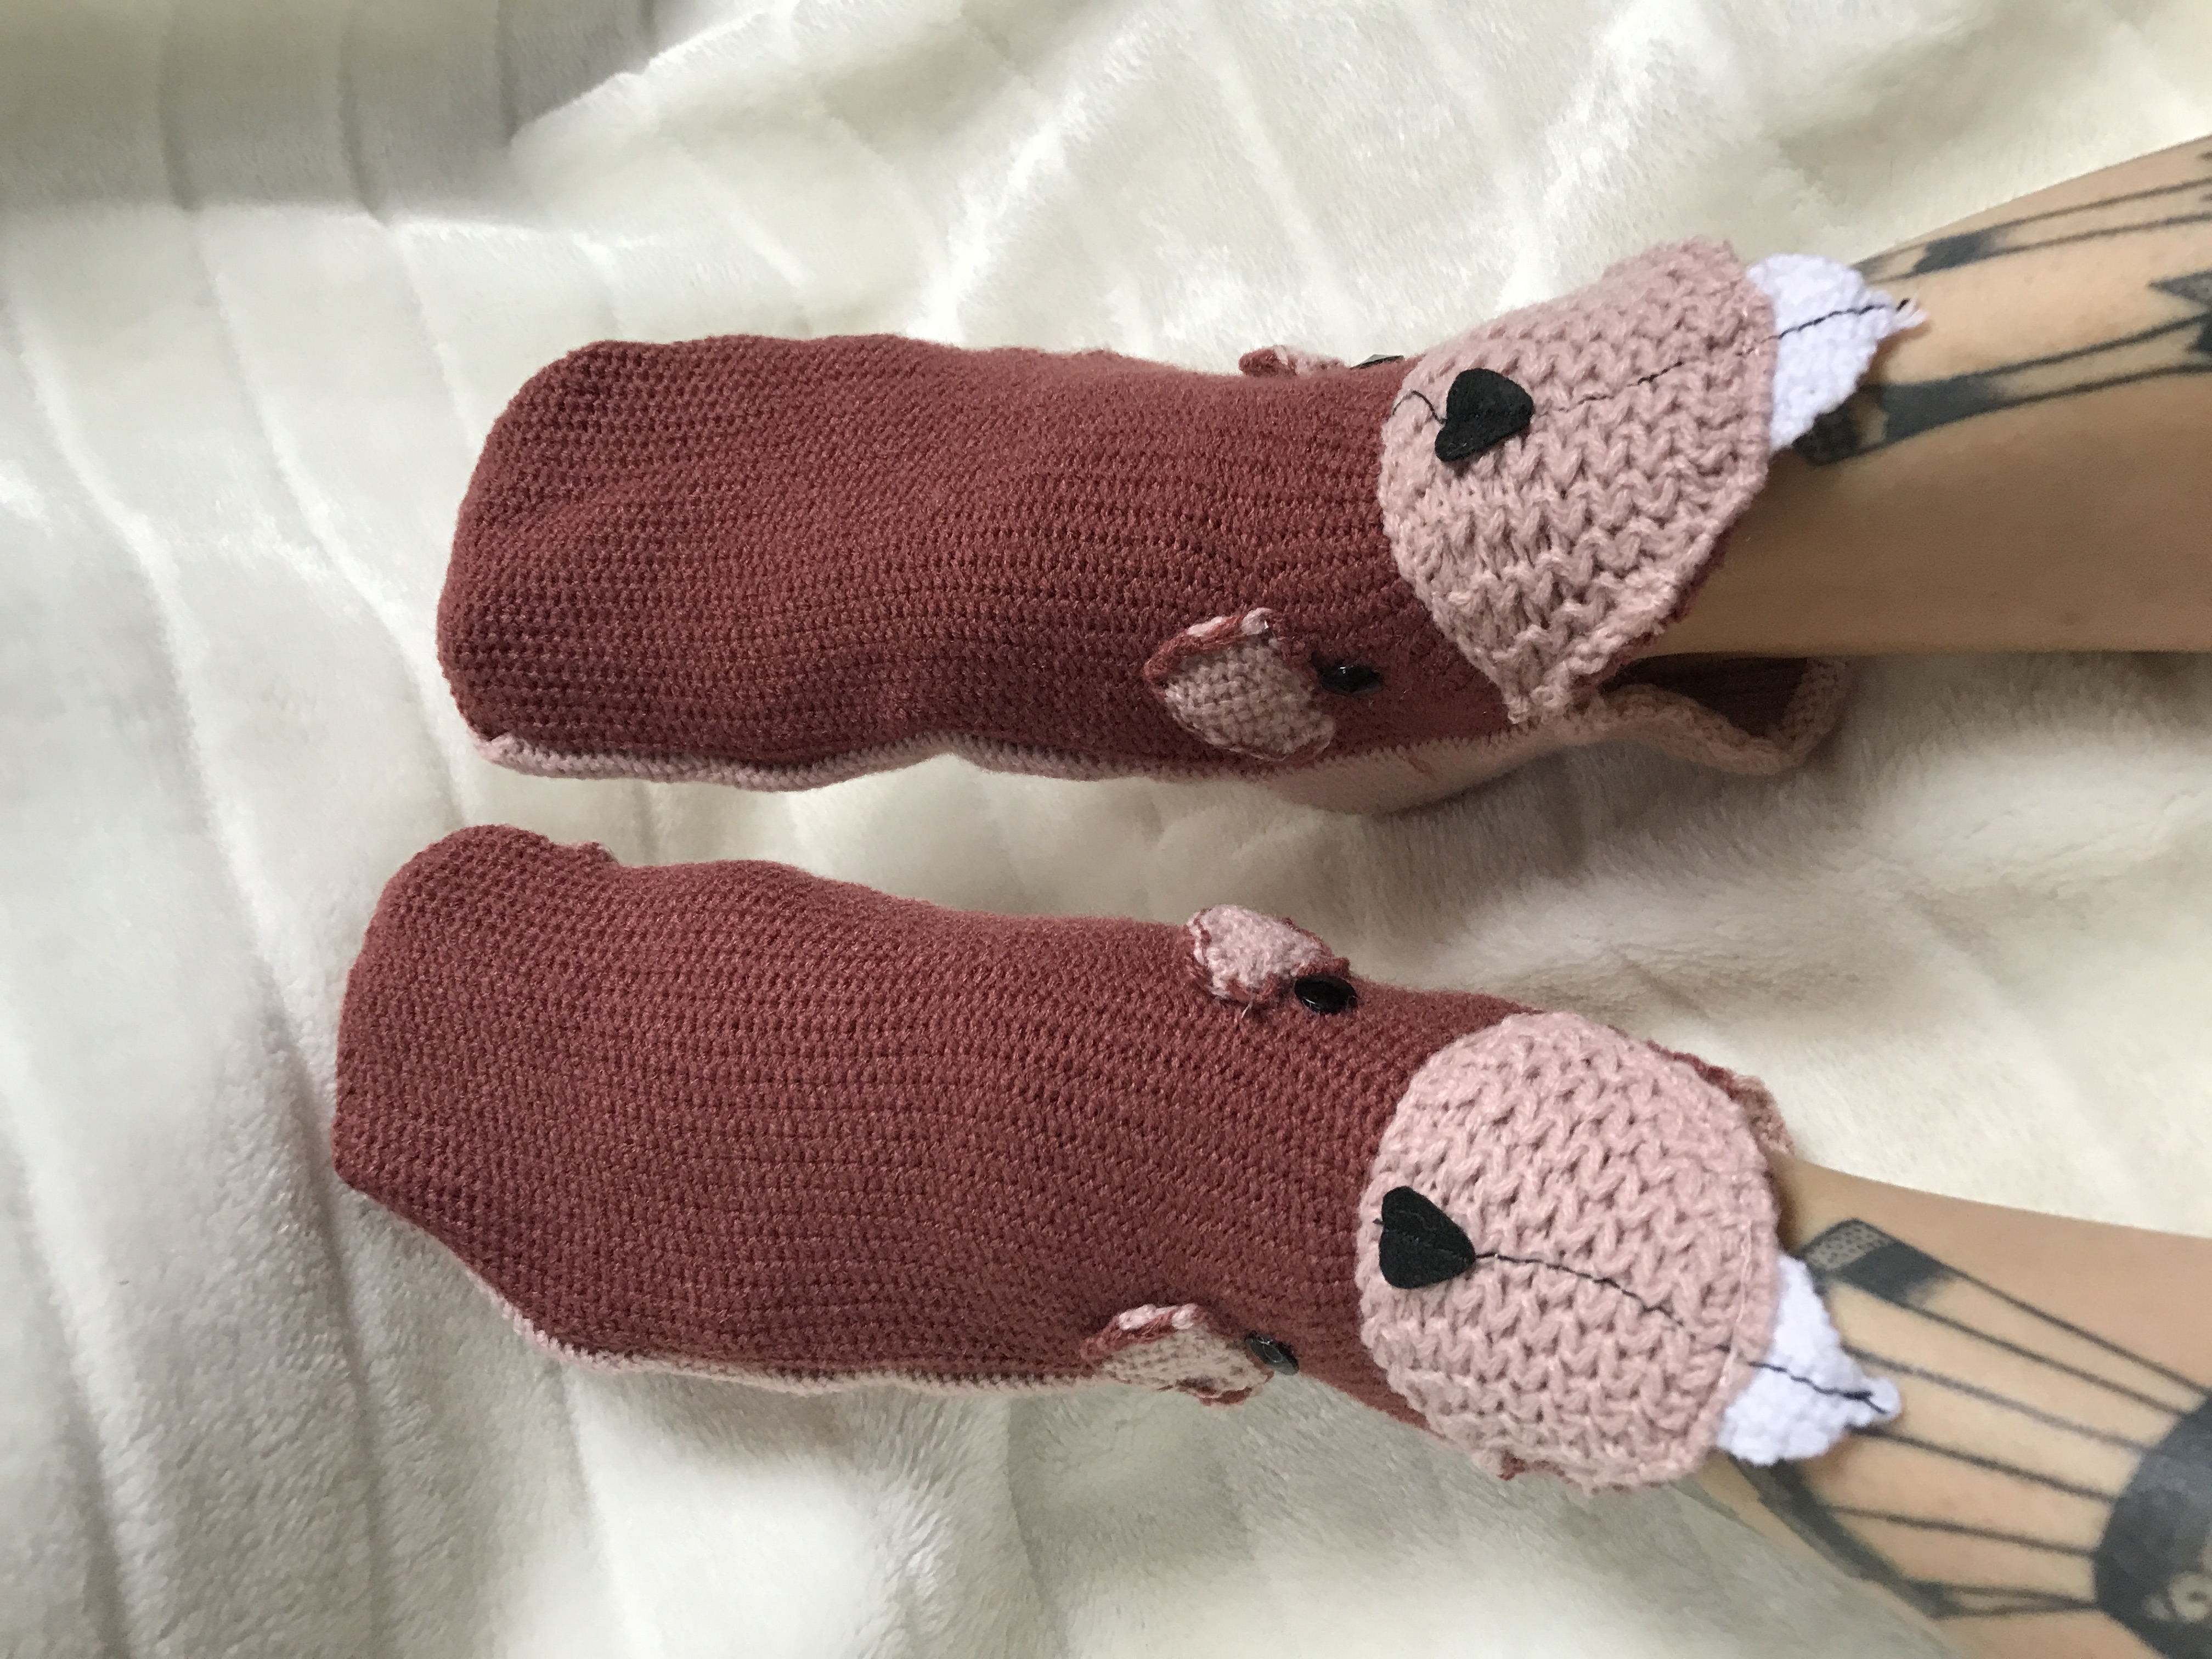 Chaussettes originales animal marmottes "Marmot socks"